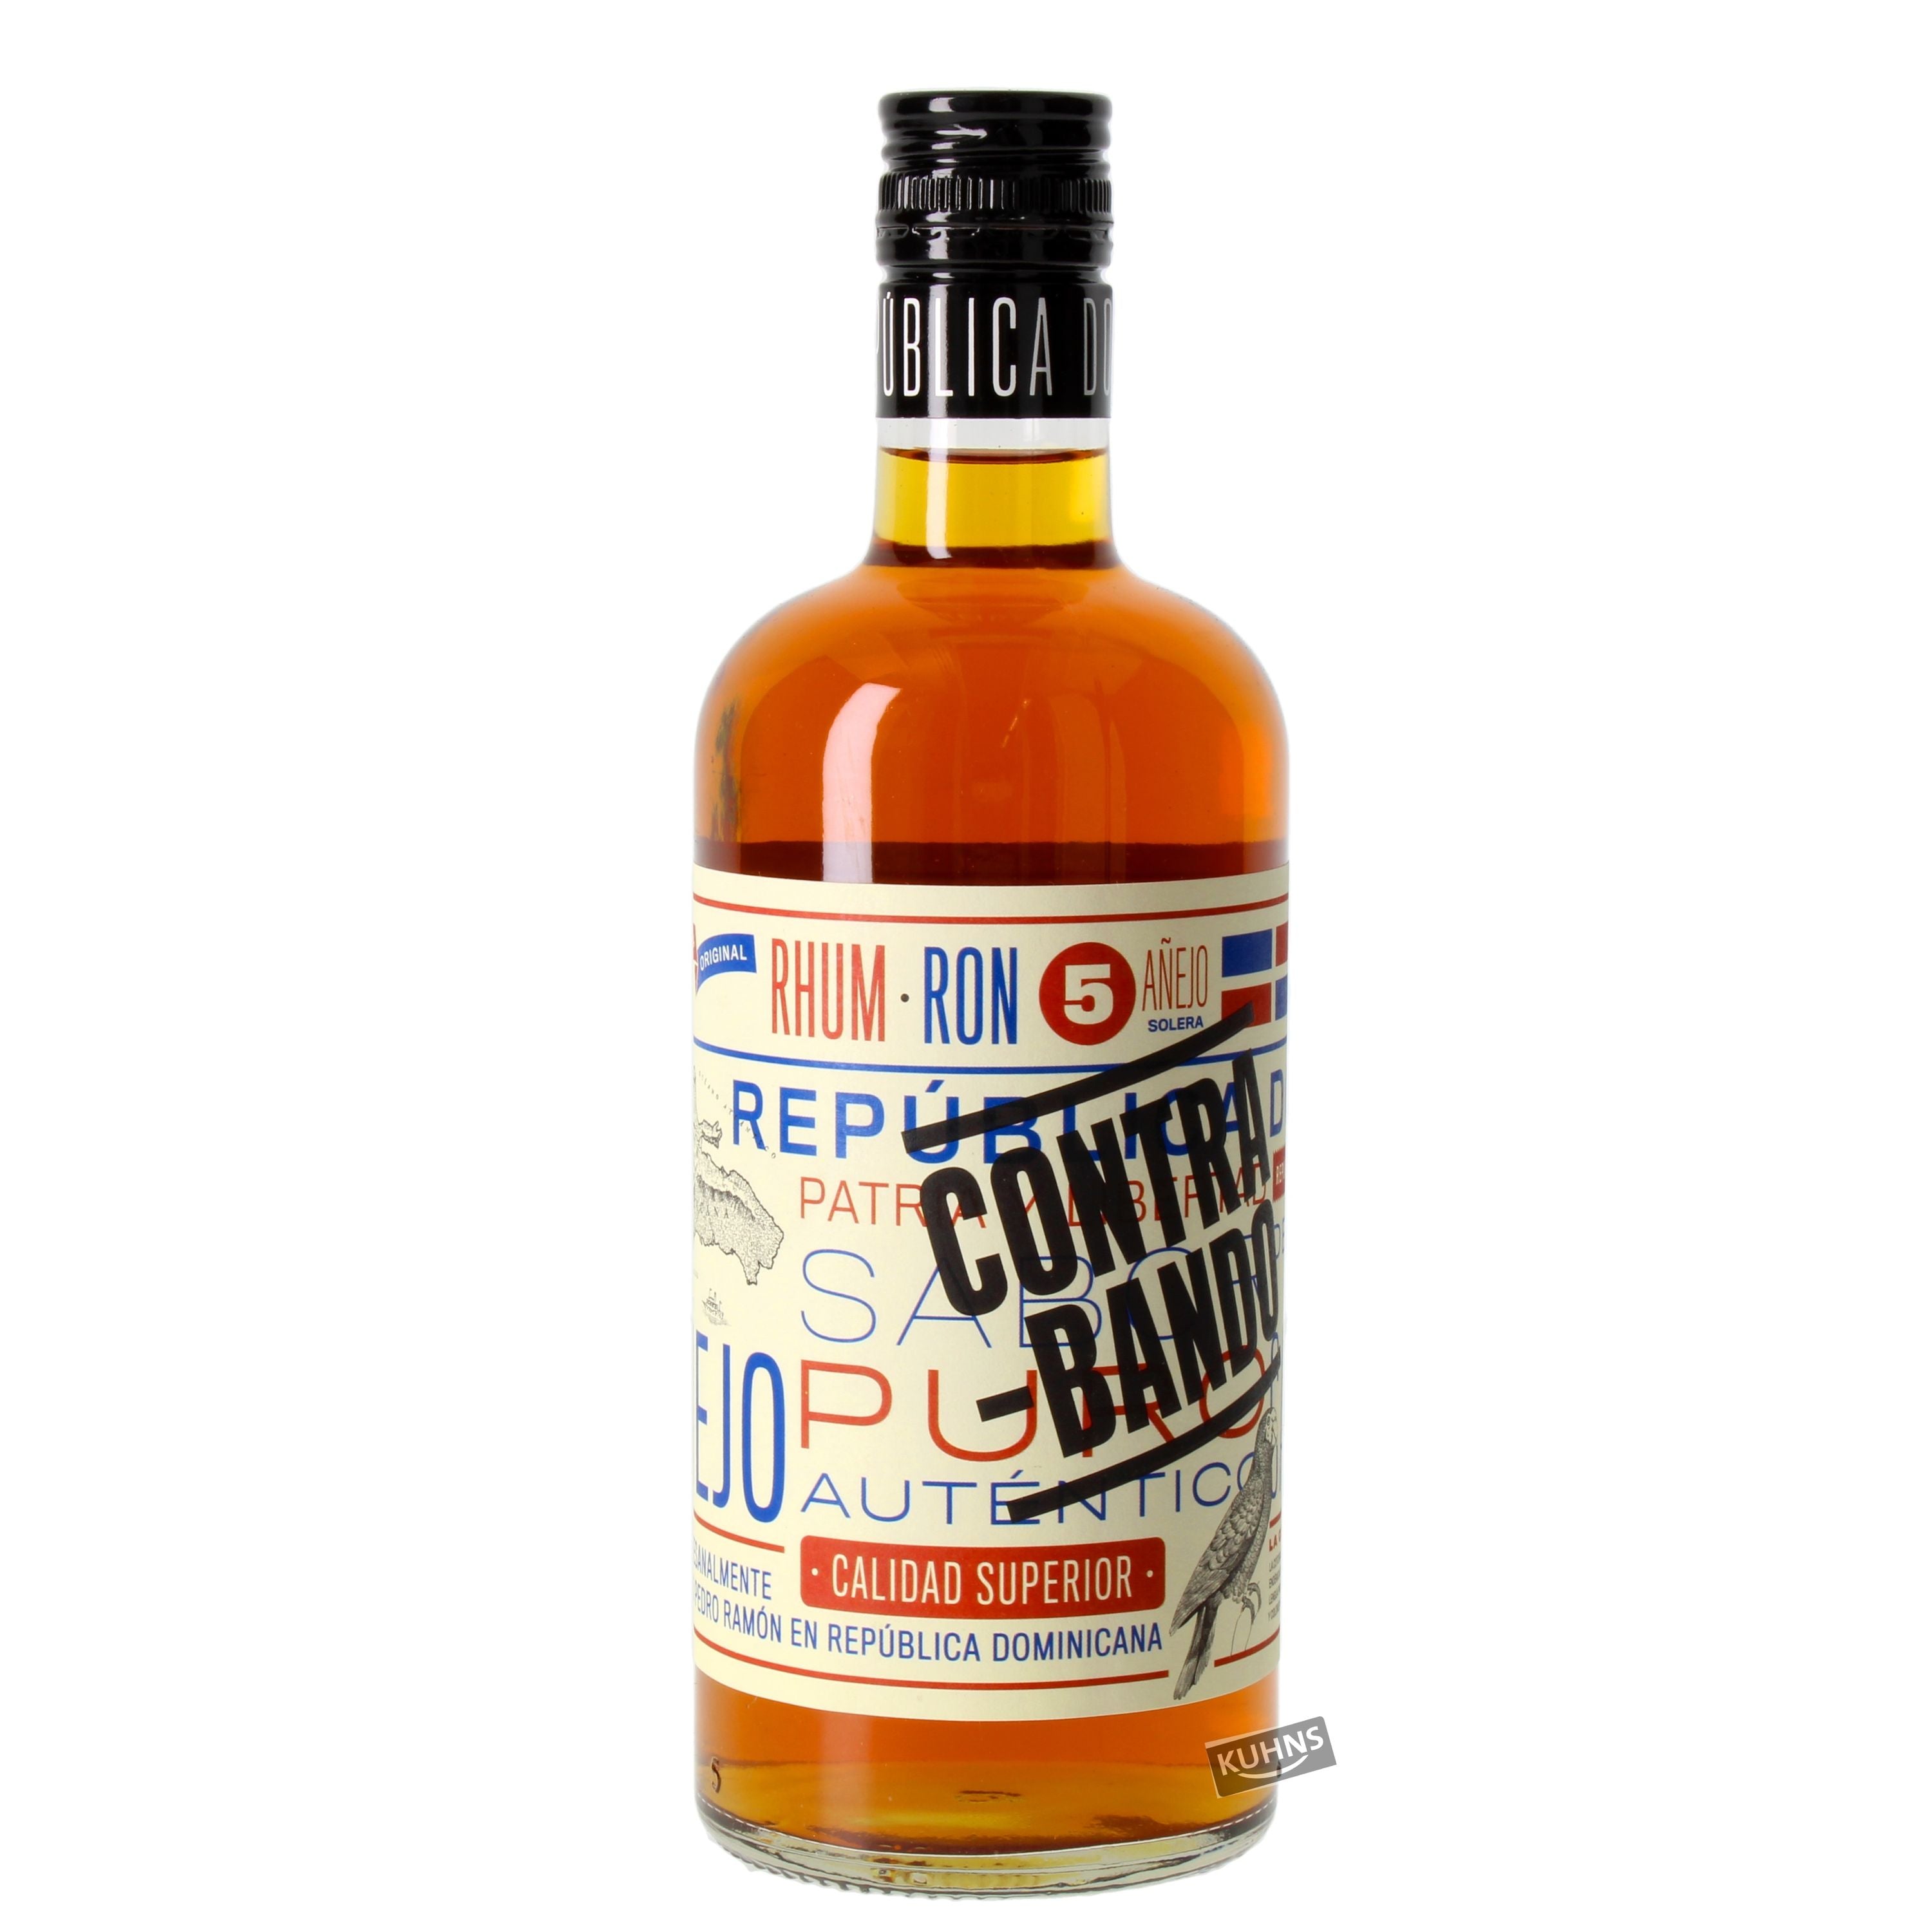 Contrabando 5 Anos Rum 0.7l, alc. 38% by volume, rum Dominican Republic